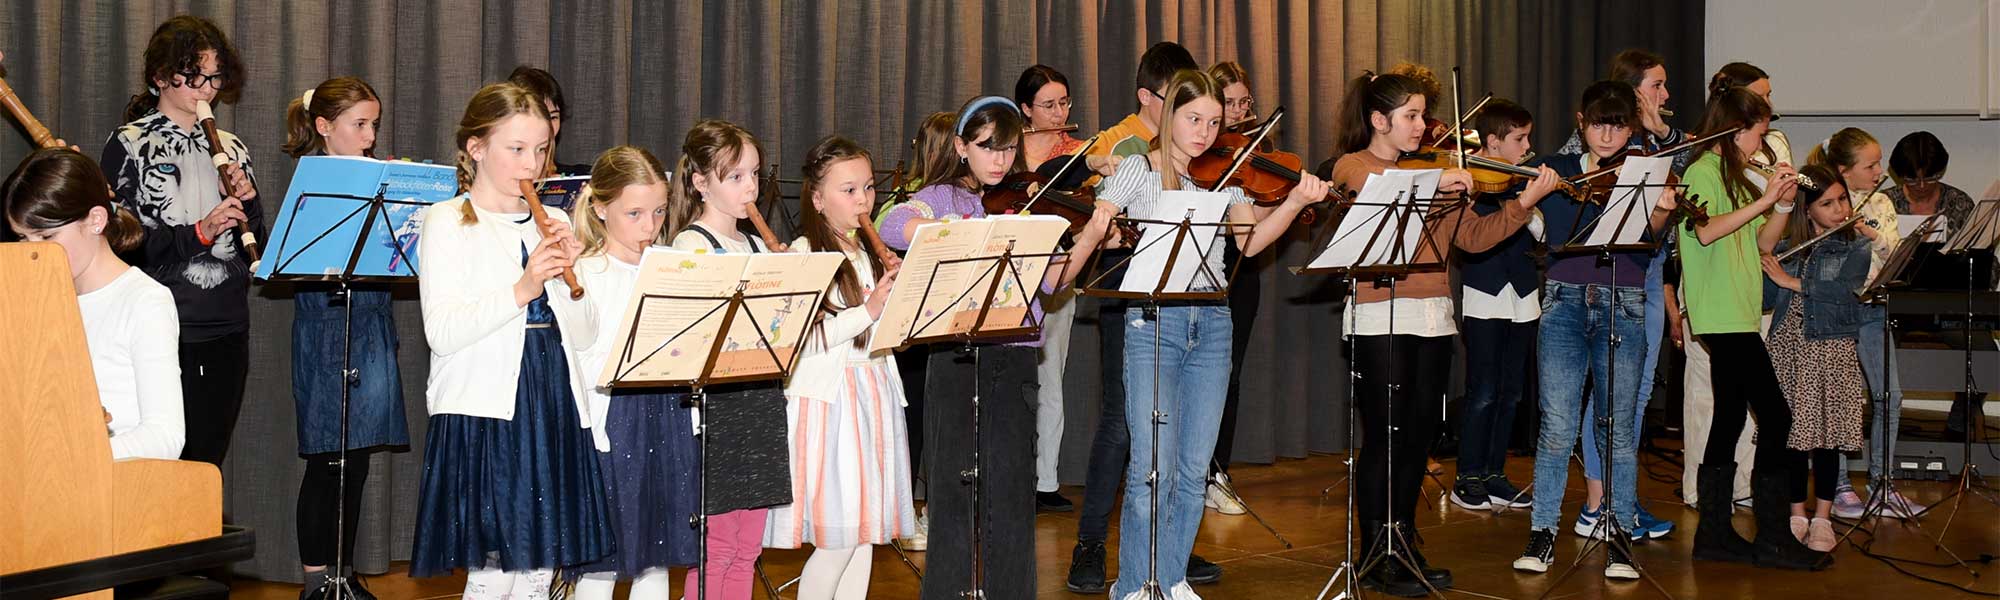 Musikschule Wolfwil-Fulenbach